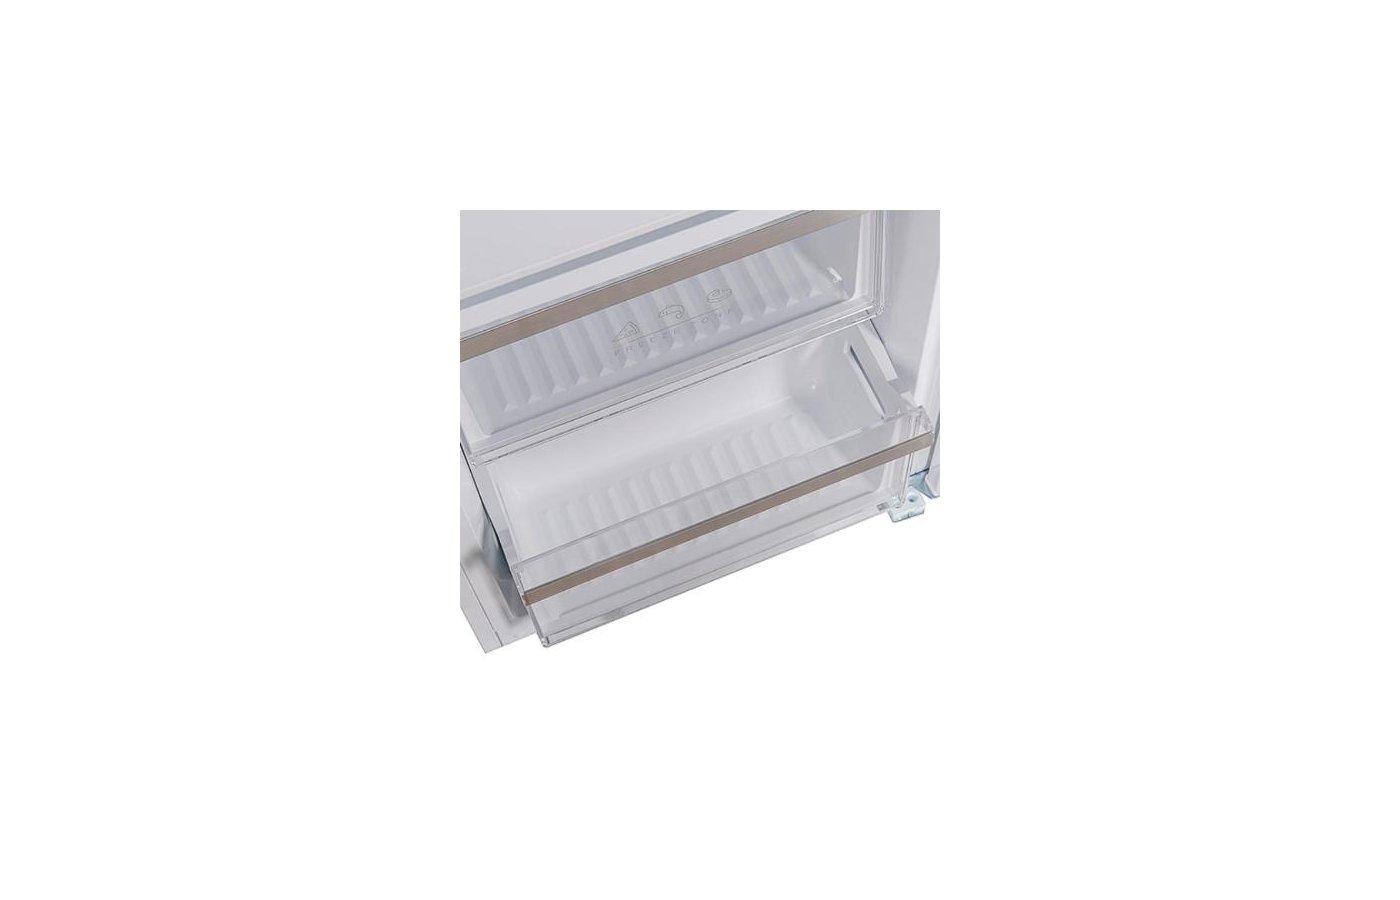 Холодильник leran bir 2705 nf. Встраиваемый холодильник Leran bir 2705 NF. Leran bir 2705 NF схема встраивания. Холодильник Леран bir 2705 NF. Встраиваемый холодильник Leran bir 2705 NF схема встраивания.